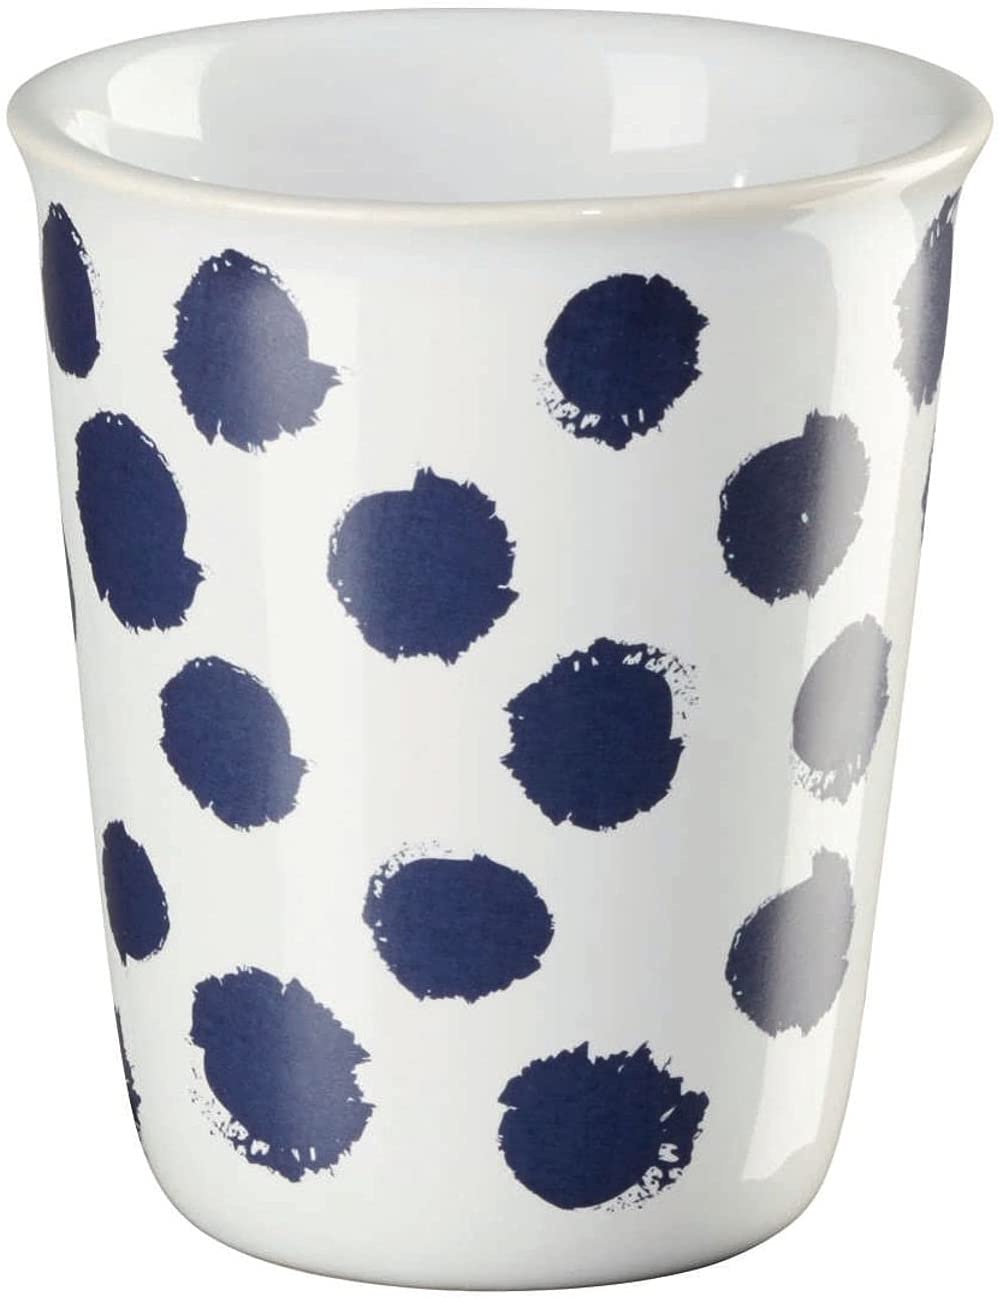 ASA - Espresso cup - white / dark blue / polka dots porcelain - diameter 6.5 cm x height 7 cm - capacity: 0.1 l.